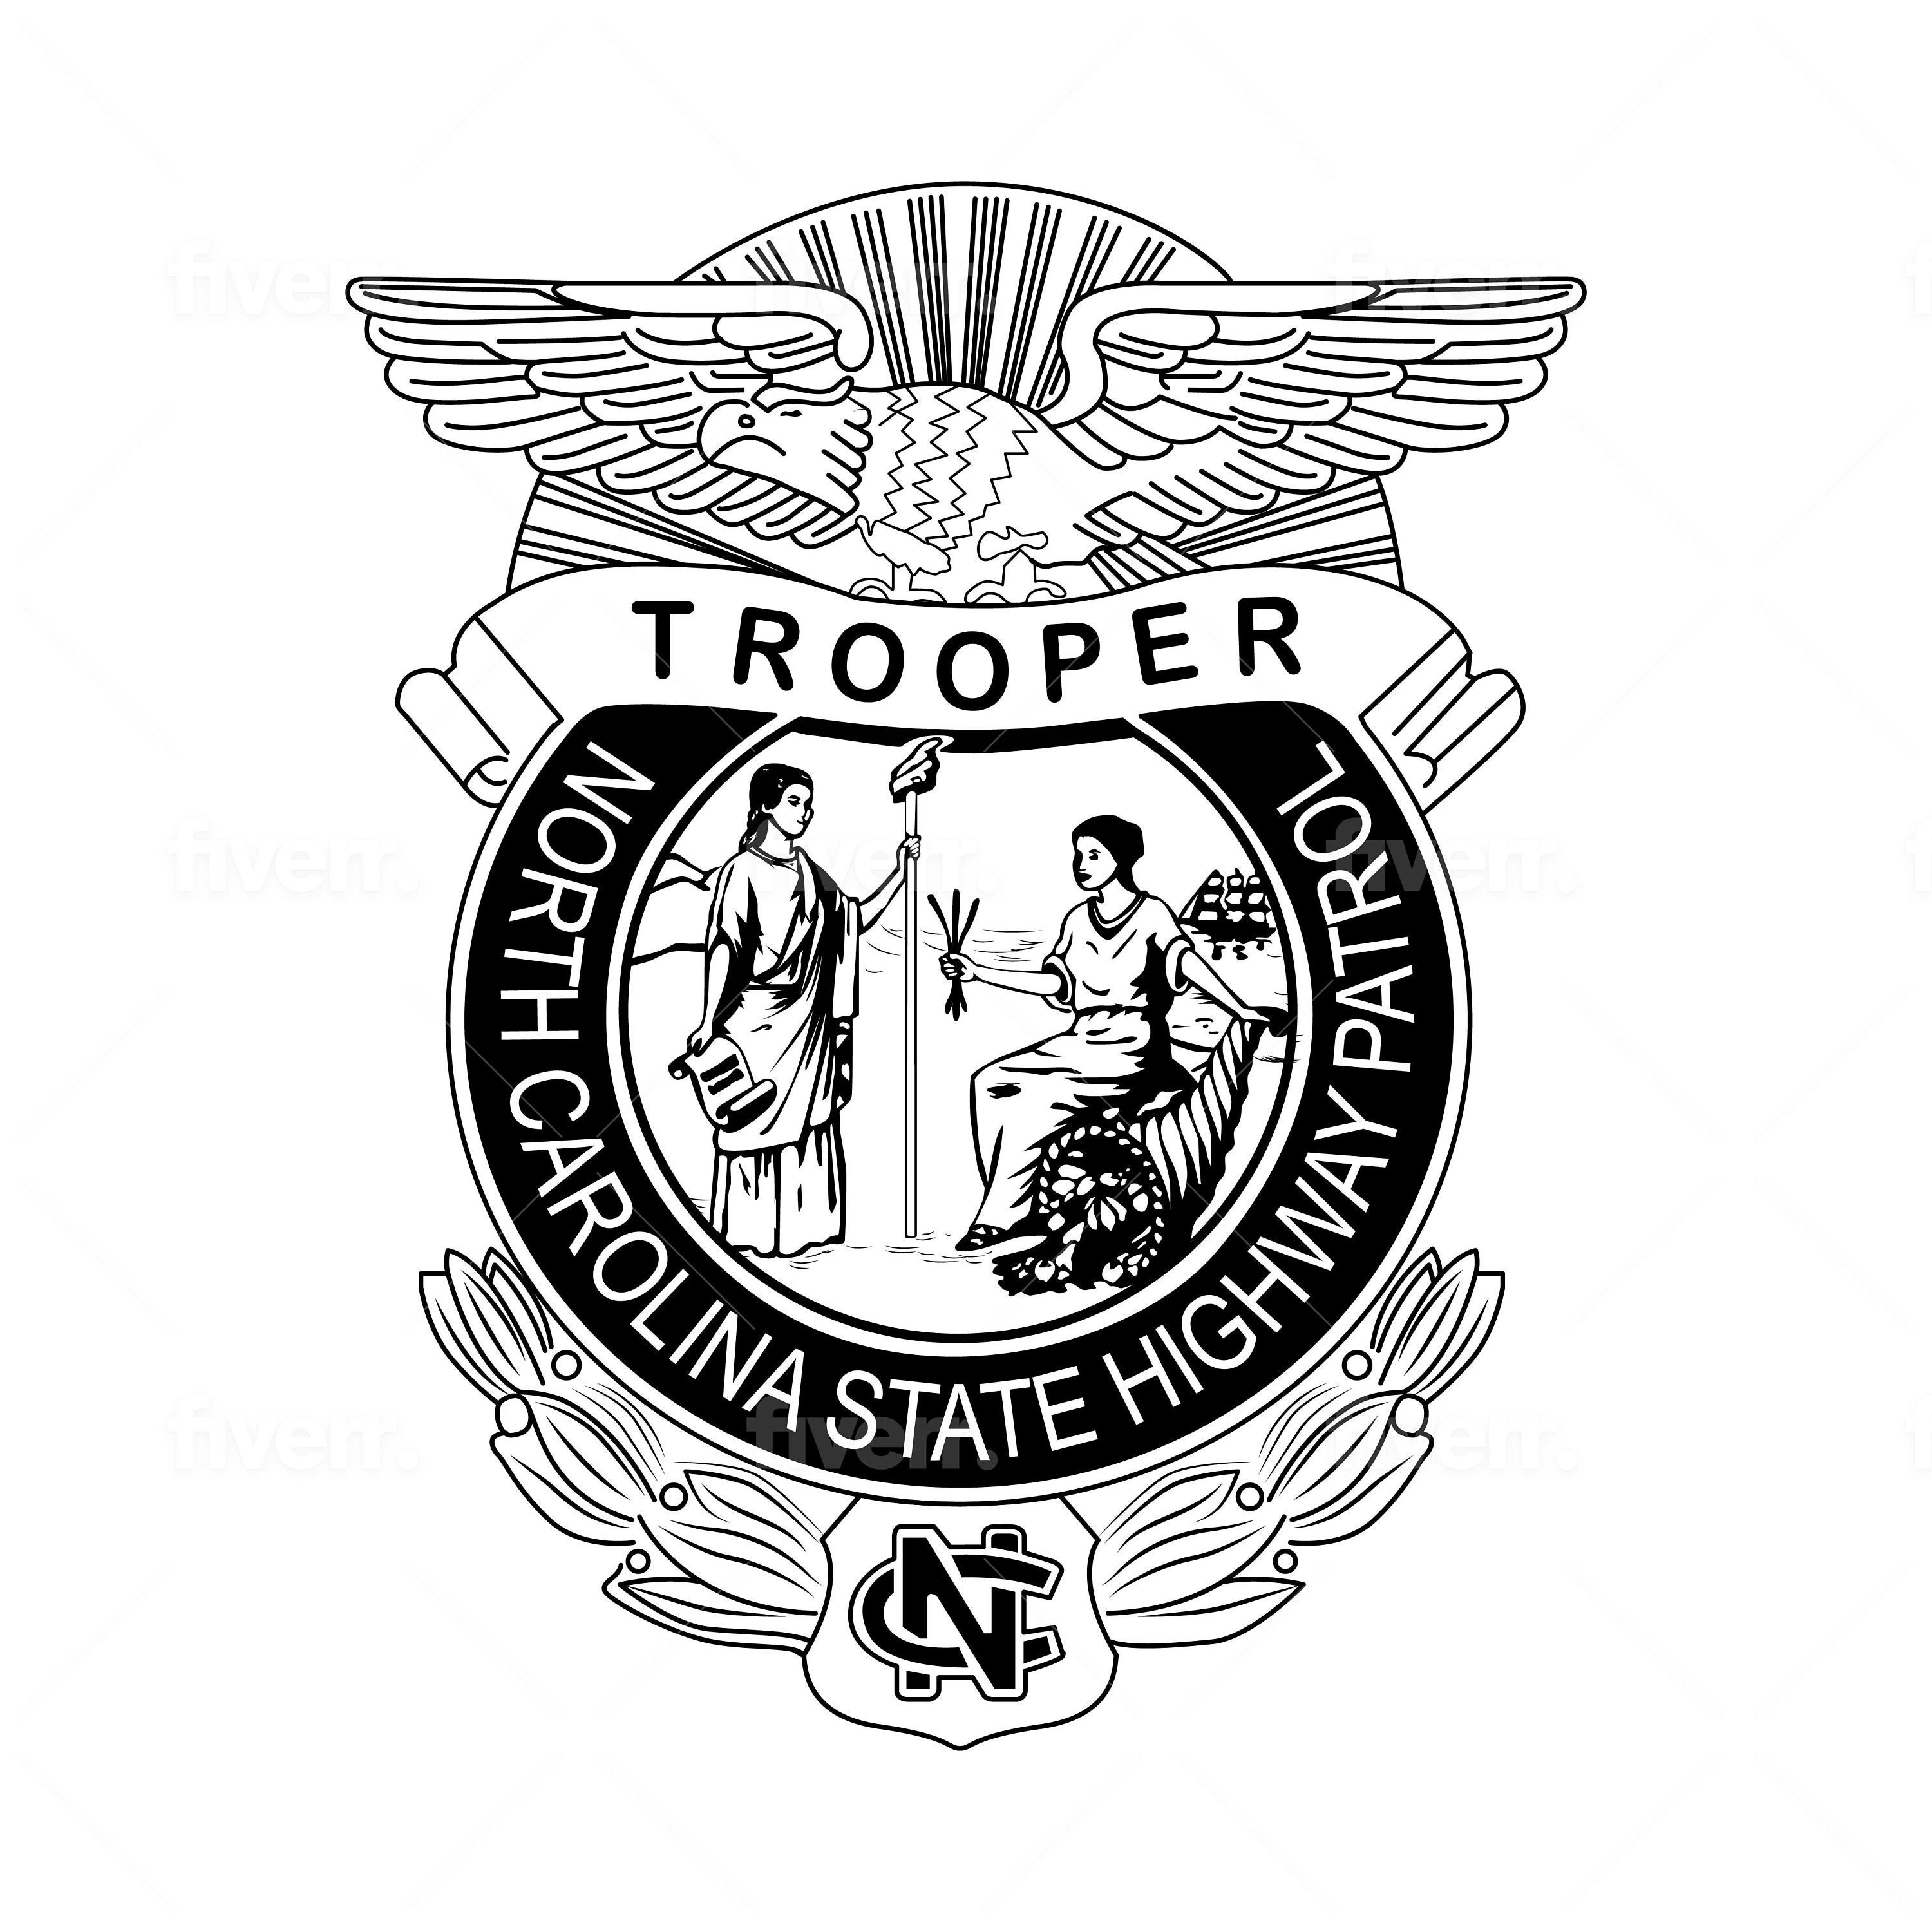 South Carolina Highway Patrol Badge SVG